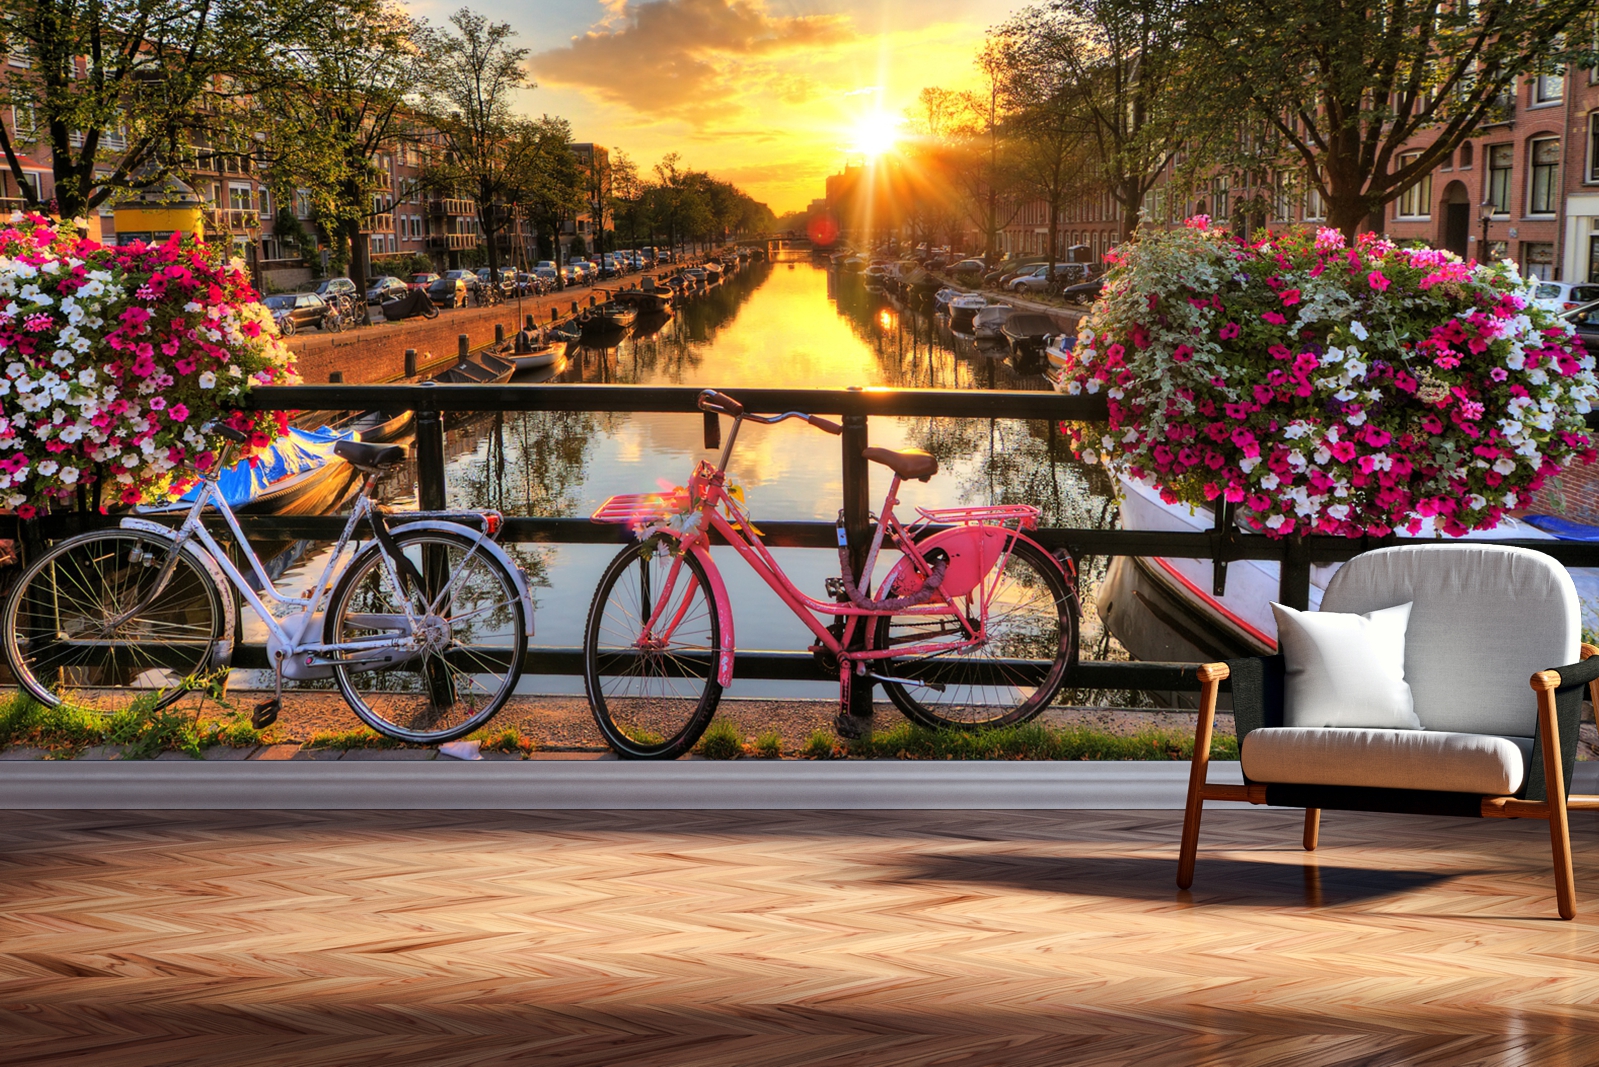 Vlies Tapete XXL Poster Fototapete Holland Fahrrad Blumen